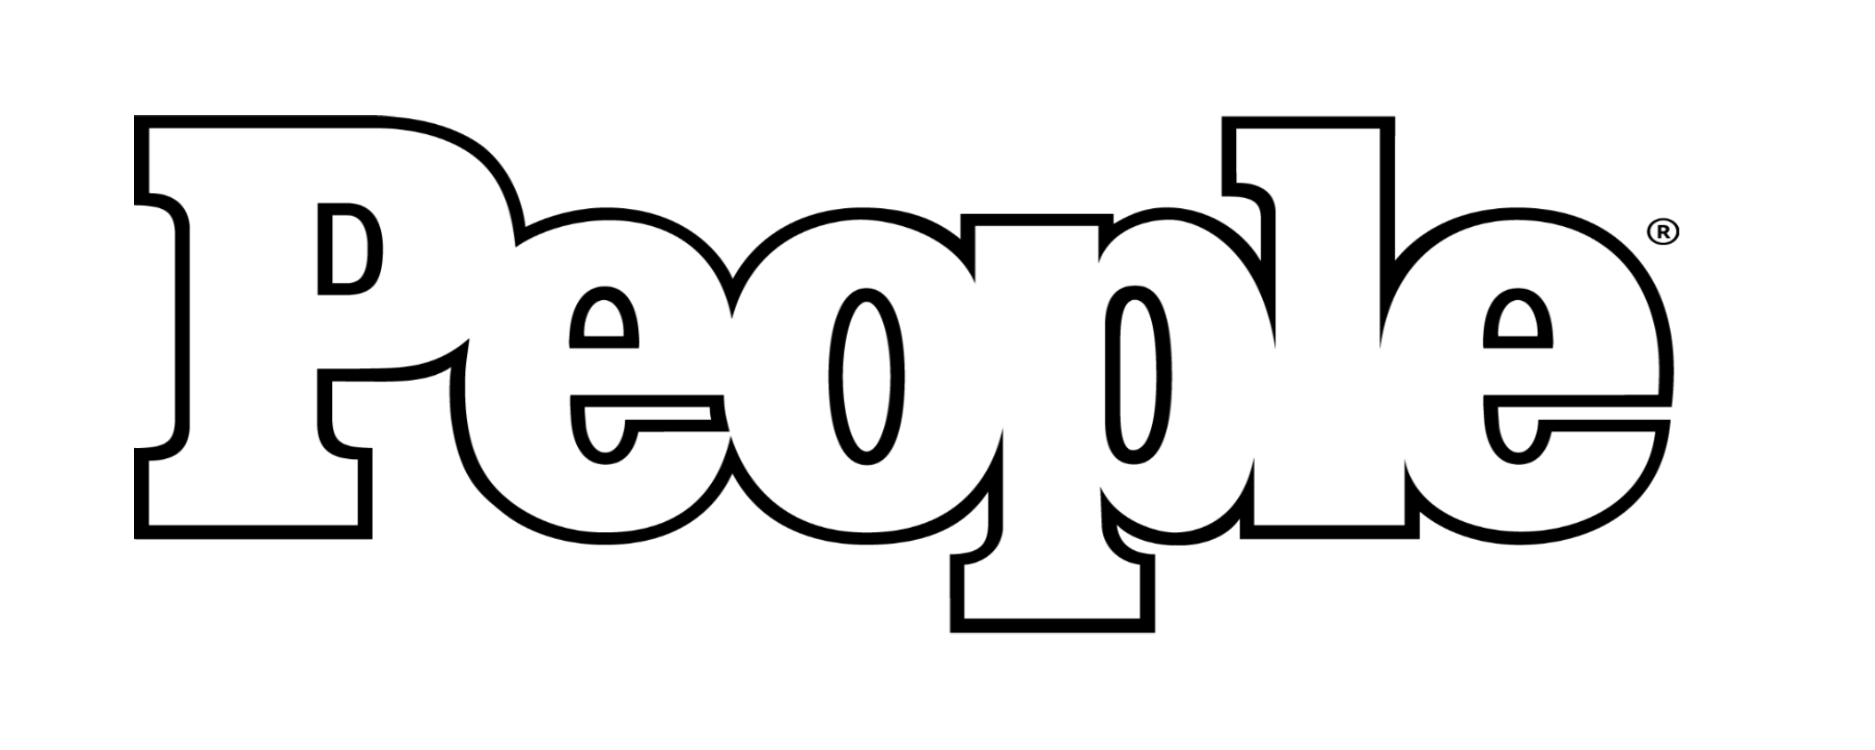 People Magazine Logo.png